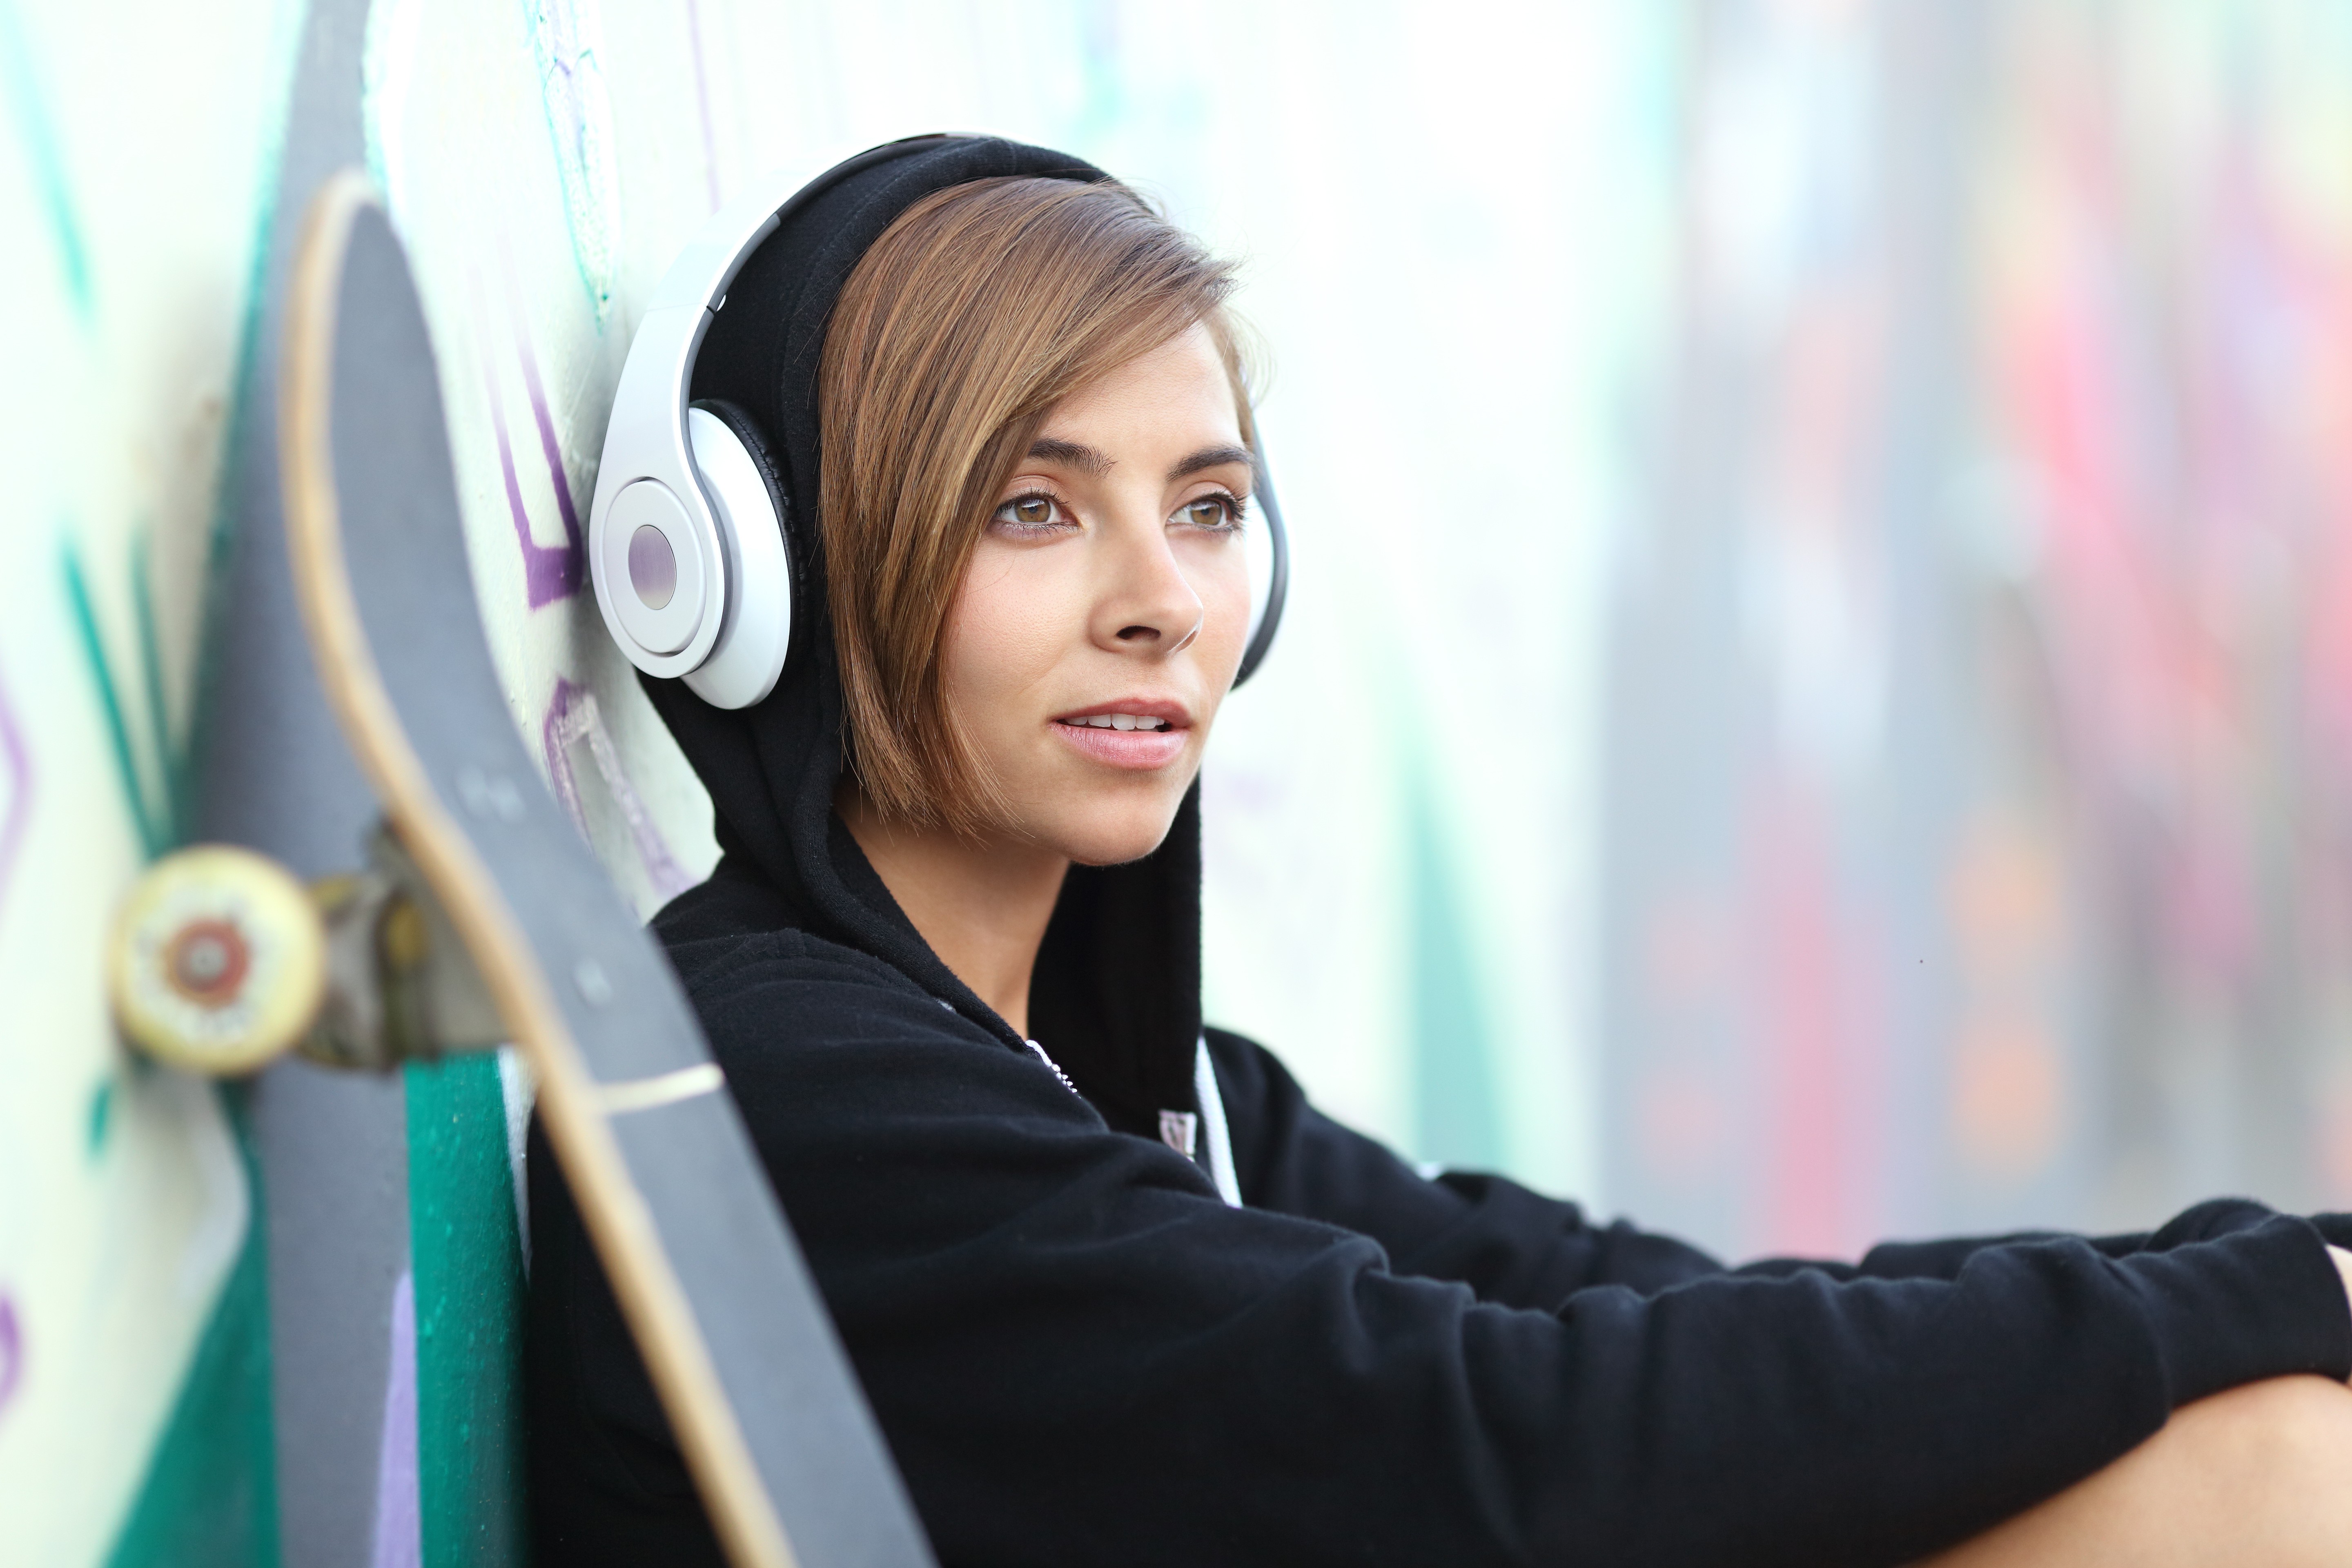 Headphones Skateboarding Students Street Women Hoods 5760x3840